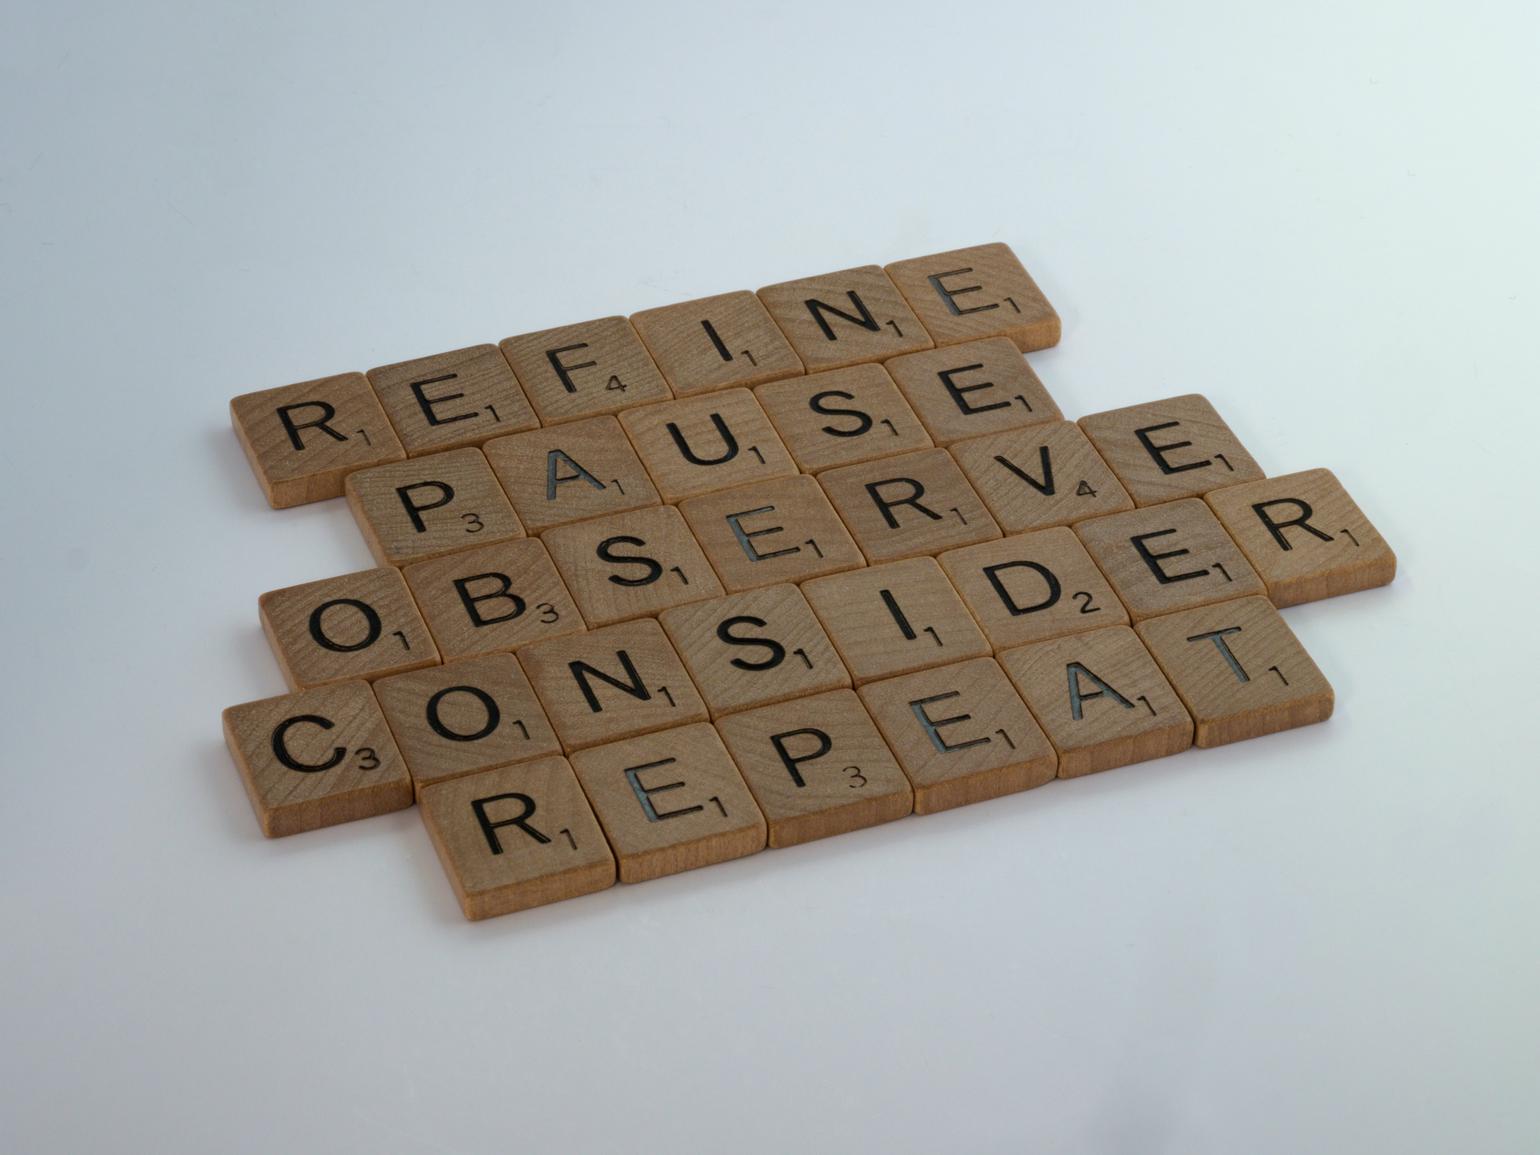 Scrabble tiles reading "Refine, Pause, Observe, Consider, Repeat"